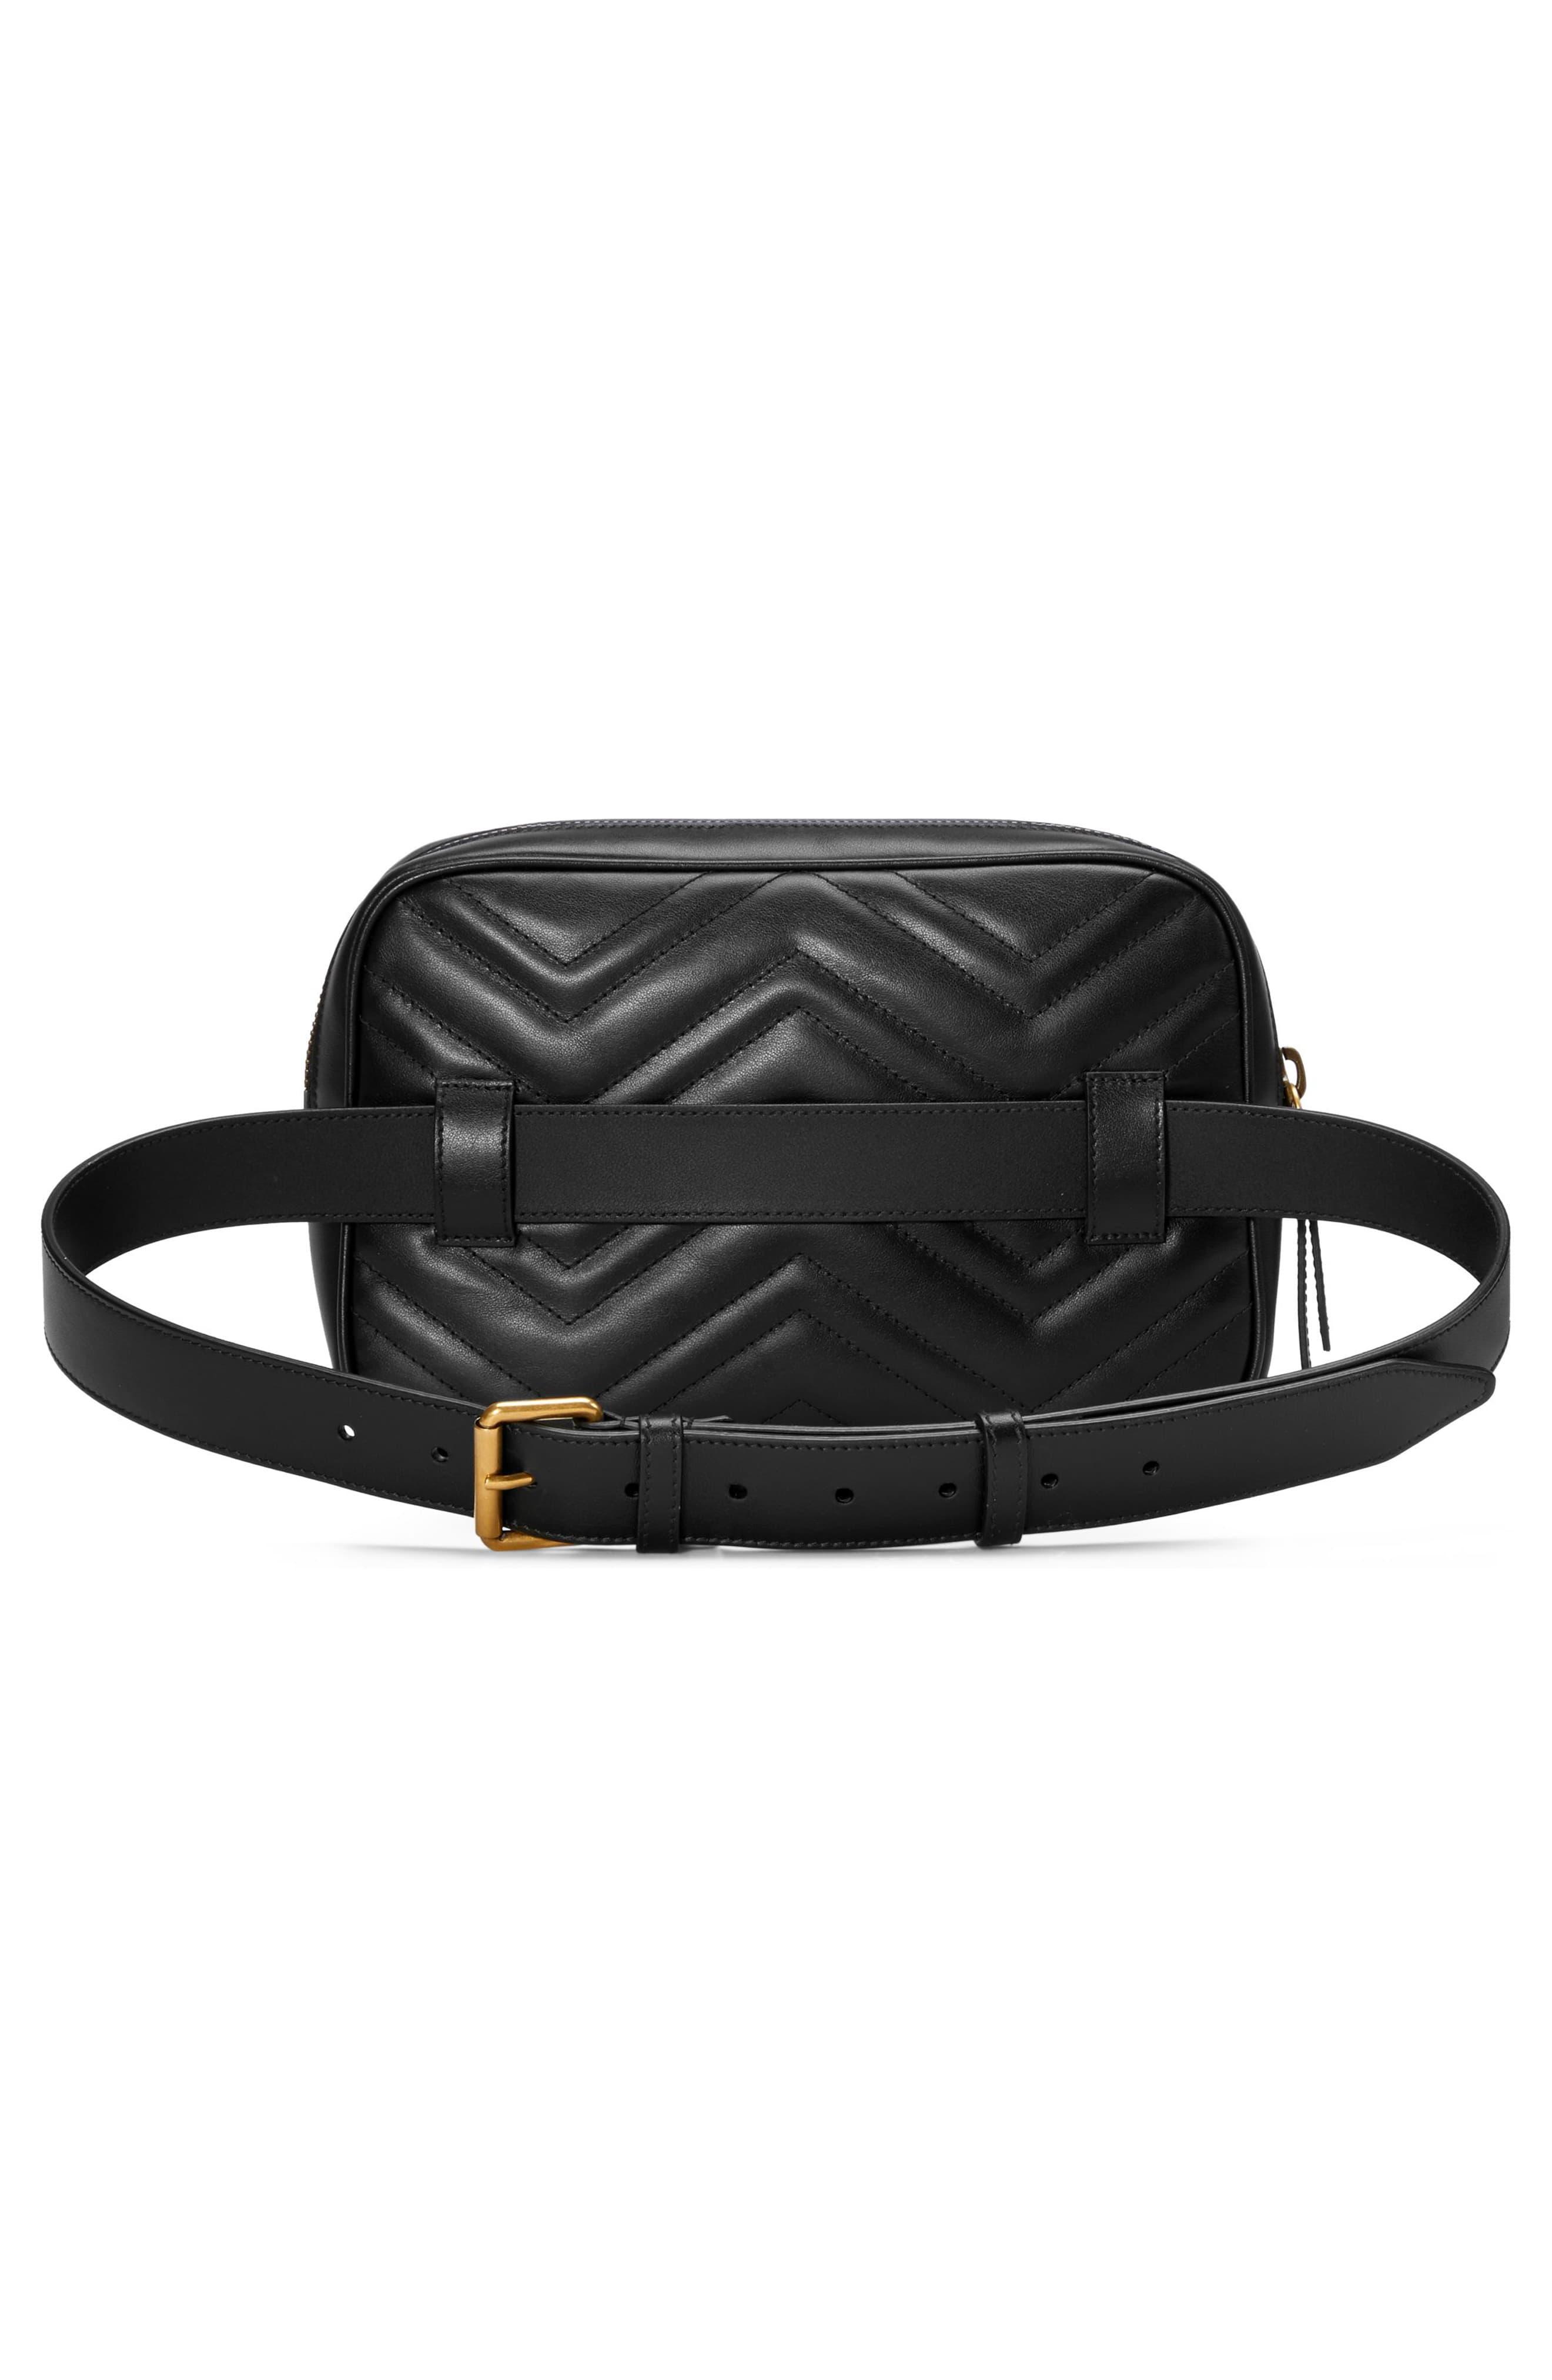 Gucci Gg Marmont 2.0 Matelassé Convertible Leather Belt Bag in Black for Men - Lyst